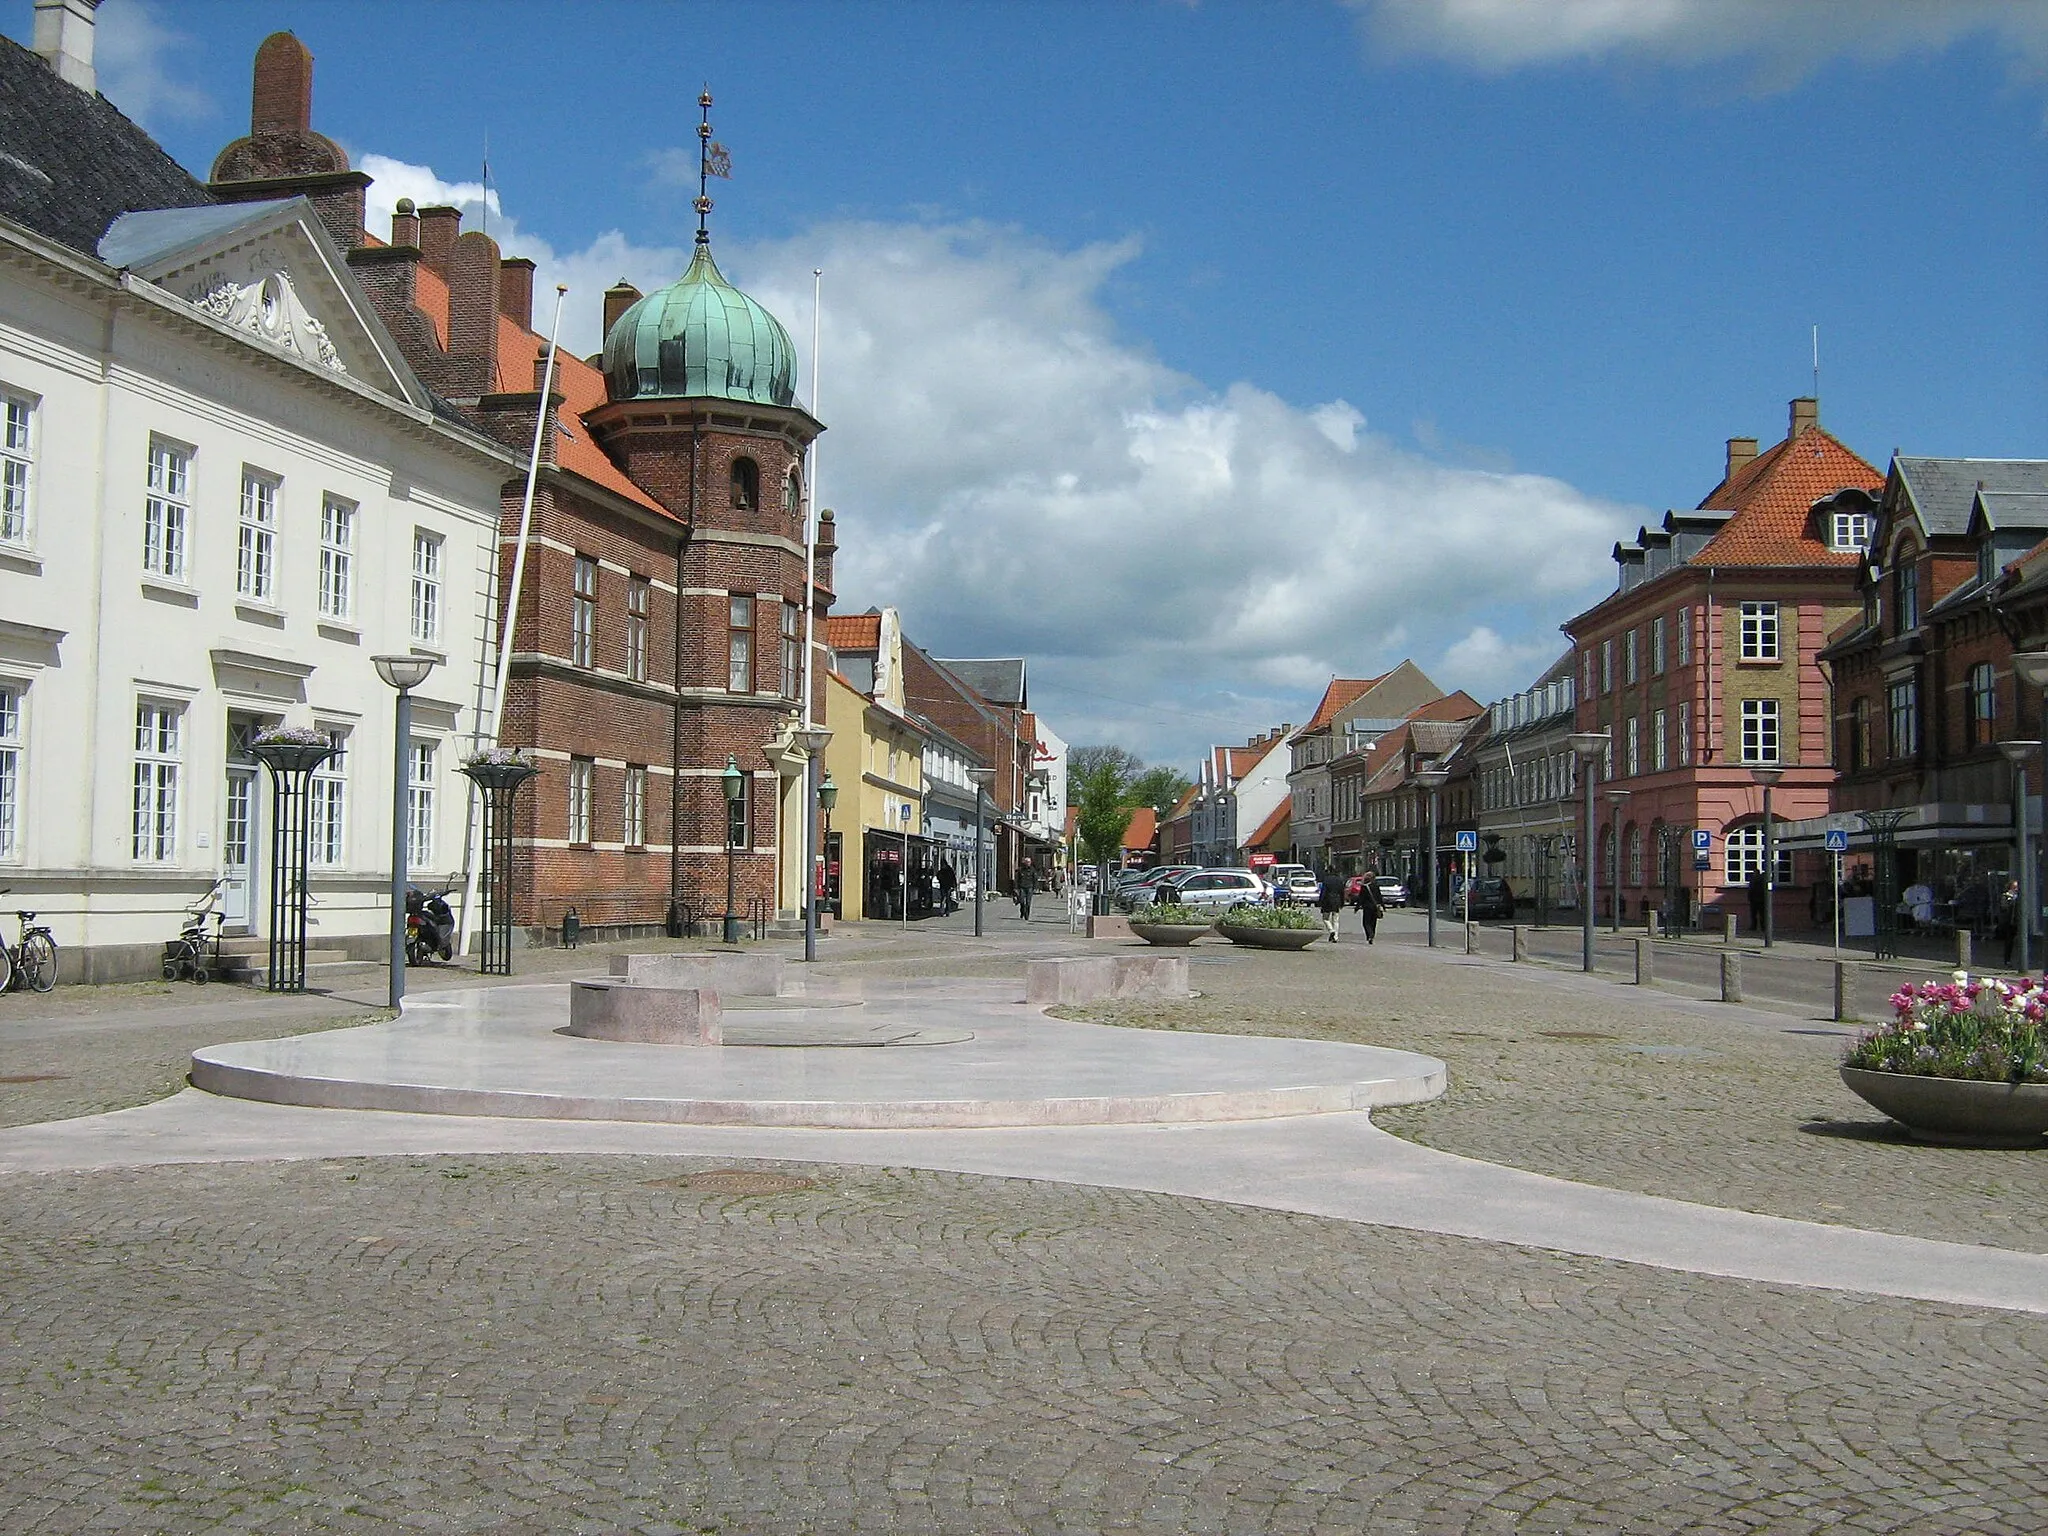 Photo showing: Storegade, the main street in Stege, Denmark